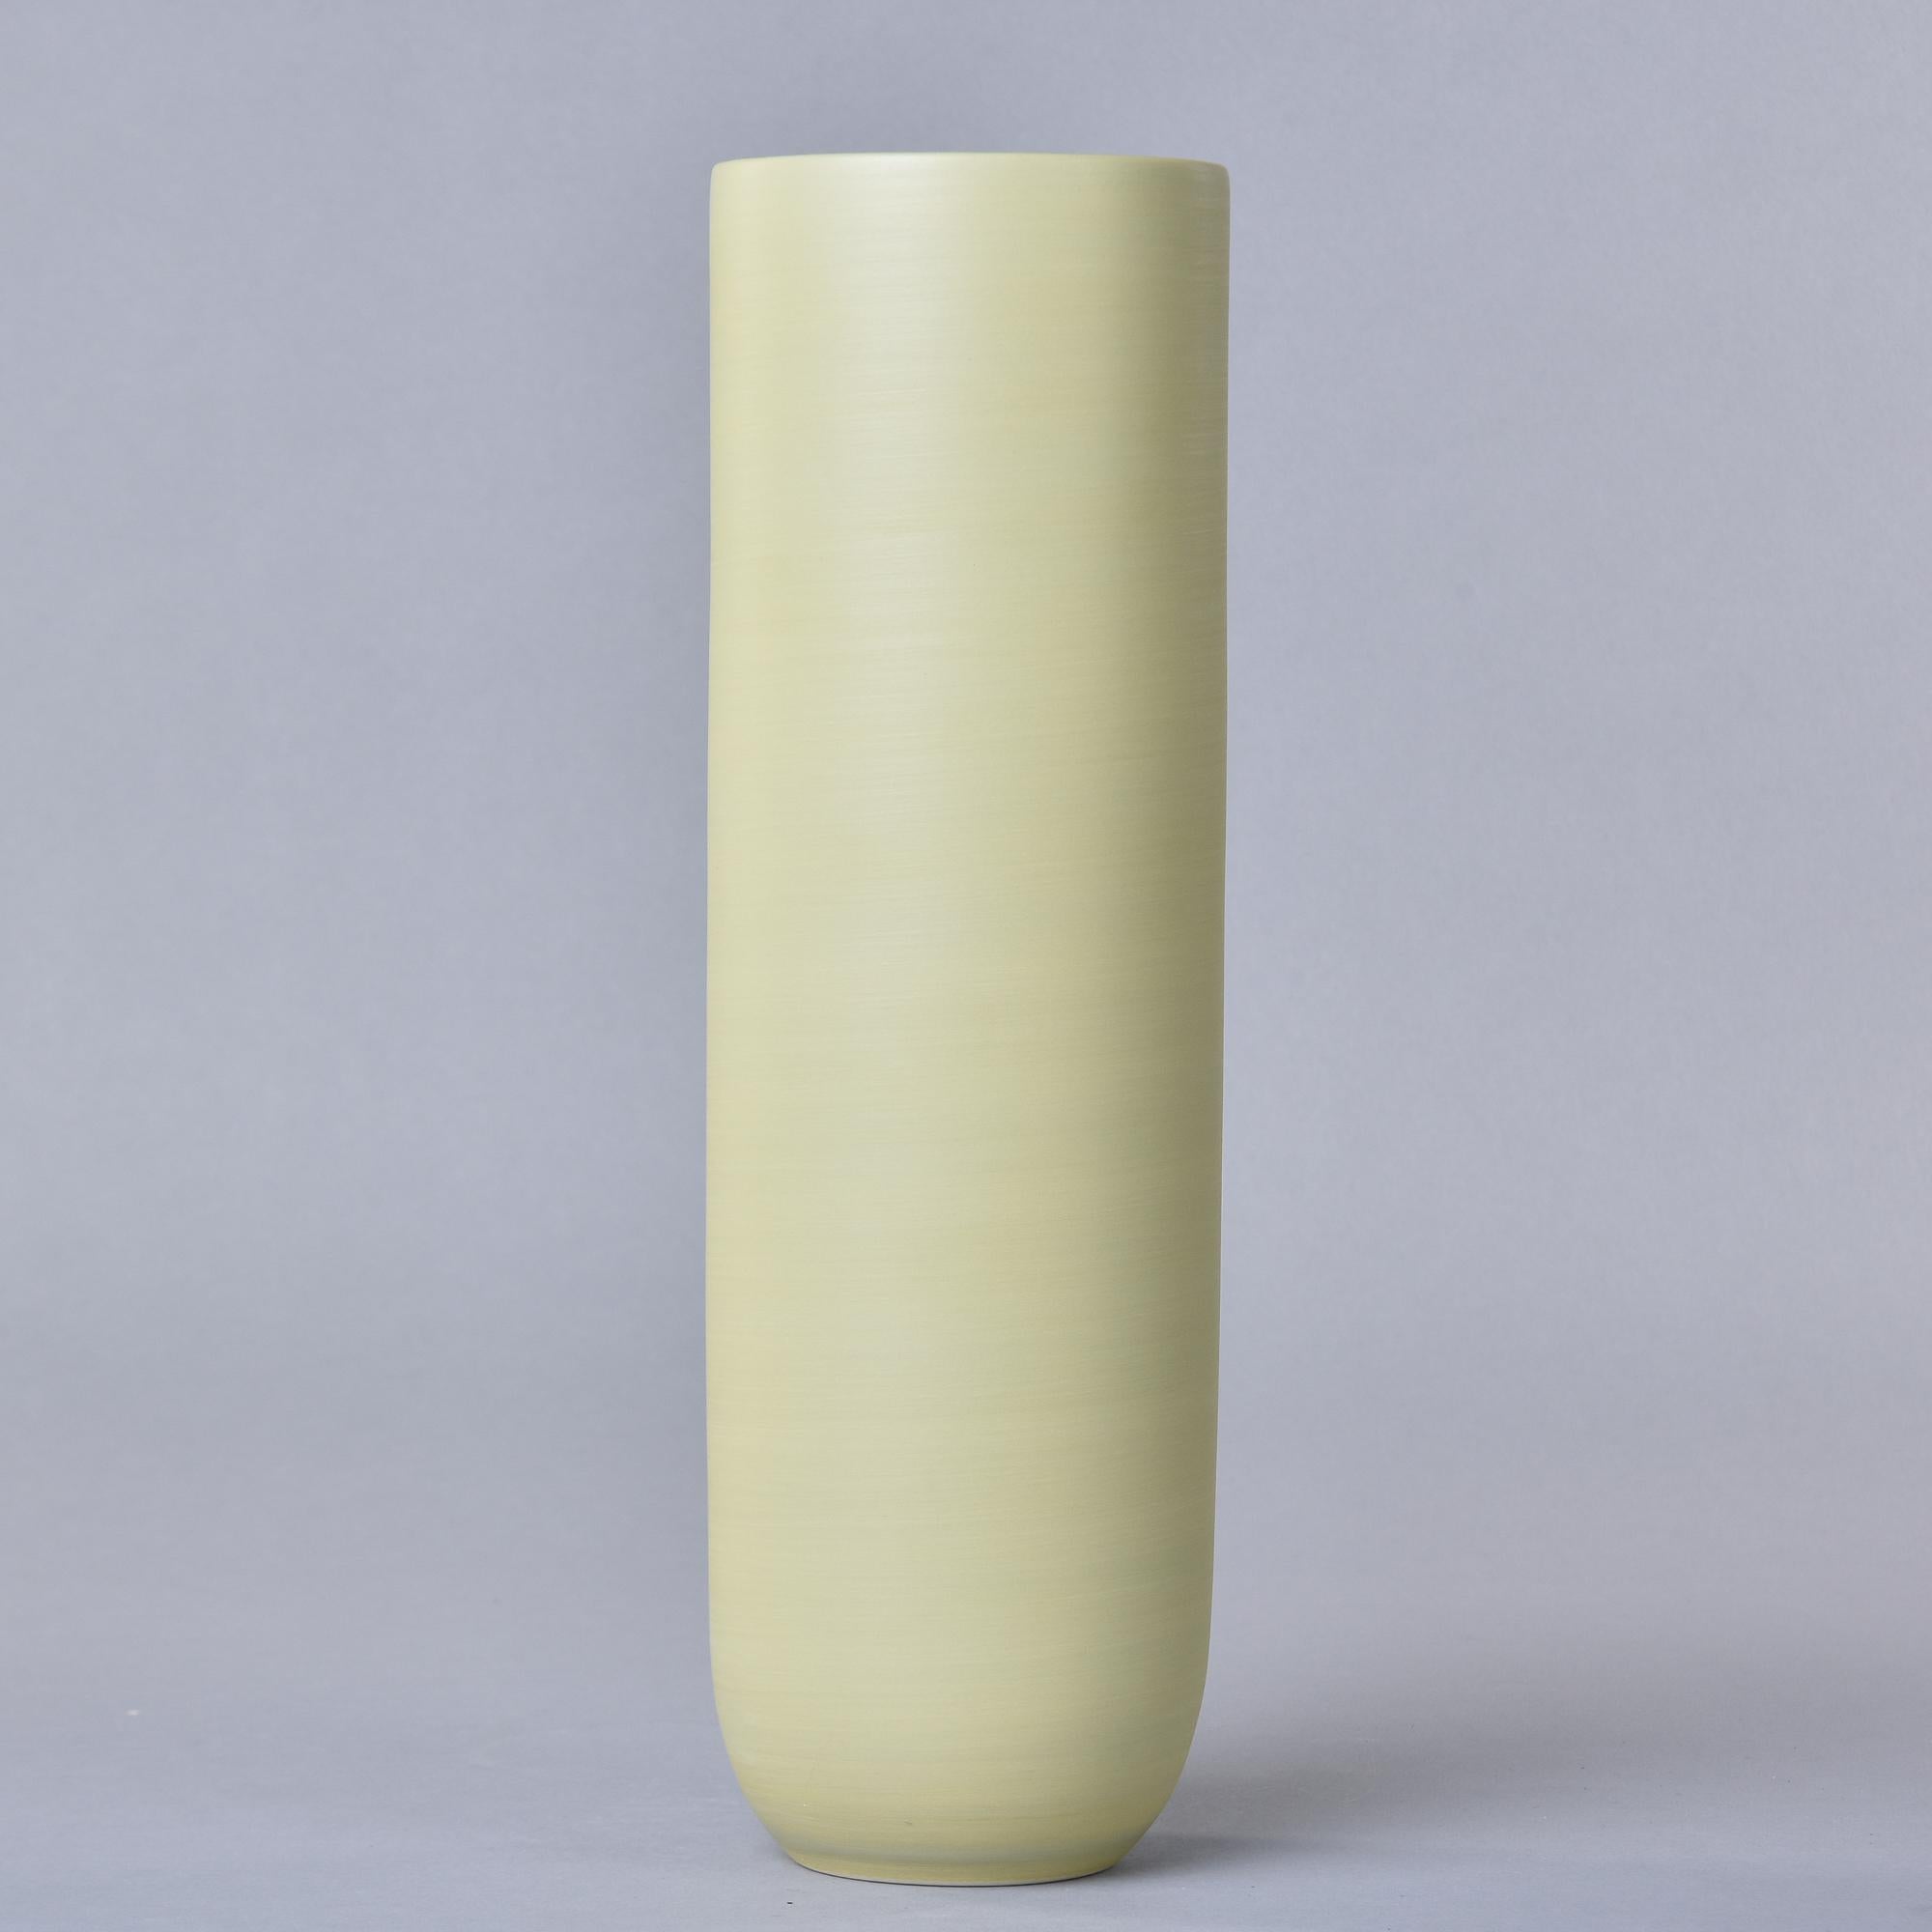 New Rina Menardi Canna 2 Vase in Pistachio Green In New Condition For Sale In Troy, MI